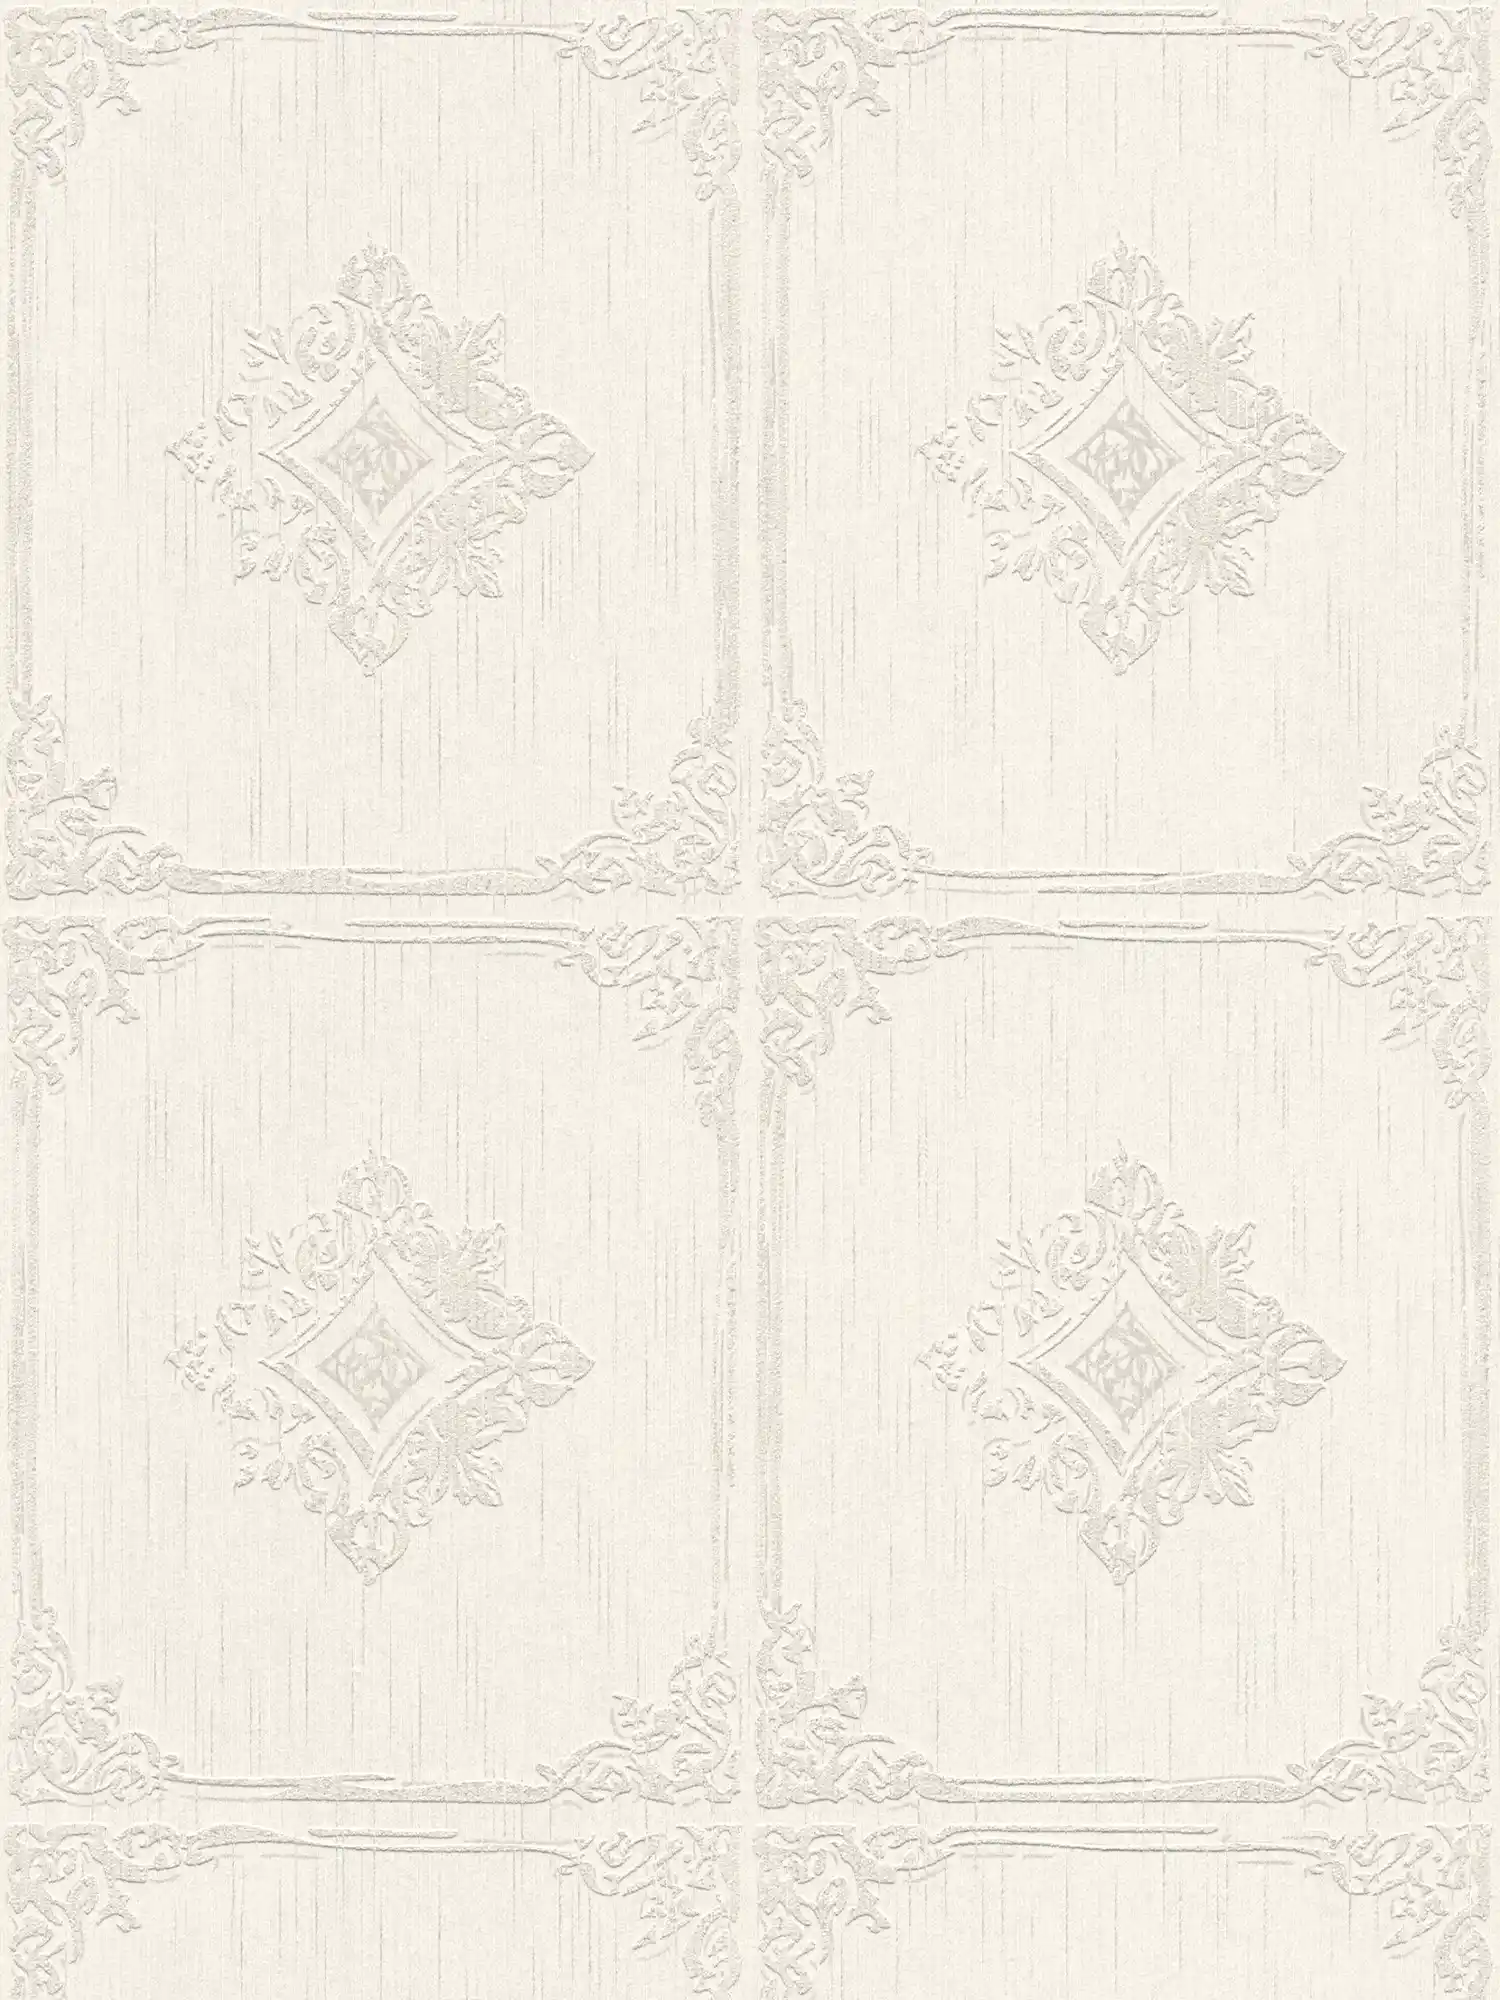 wallpaper vintage stucco design with ornament coffers - cream, grey
